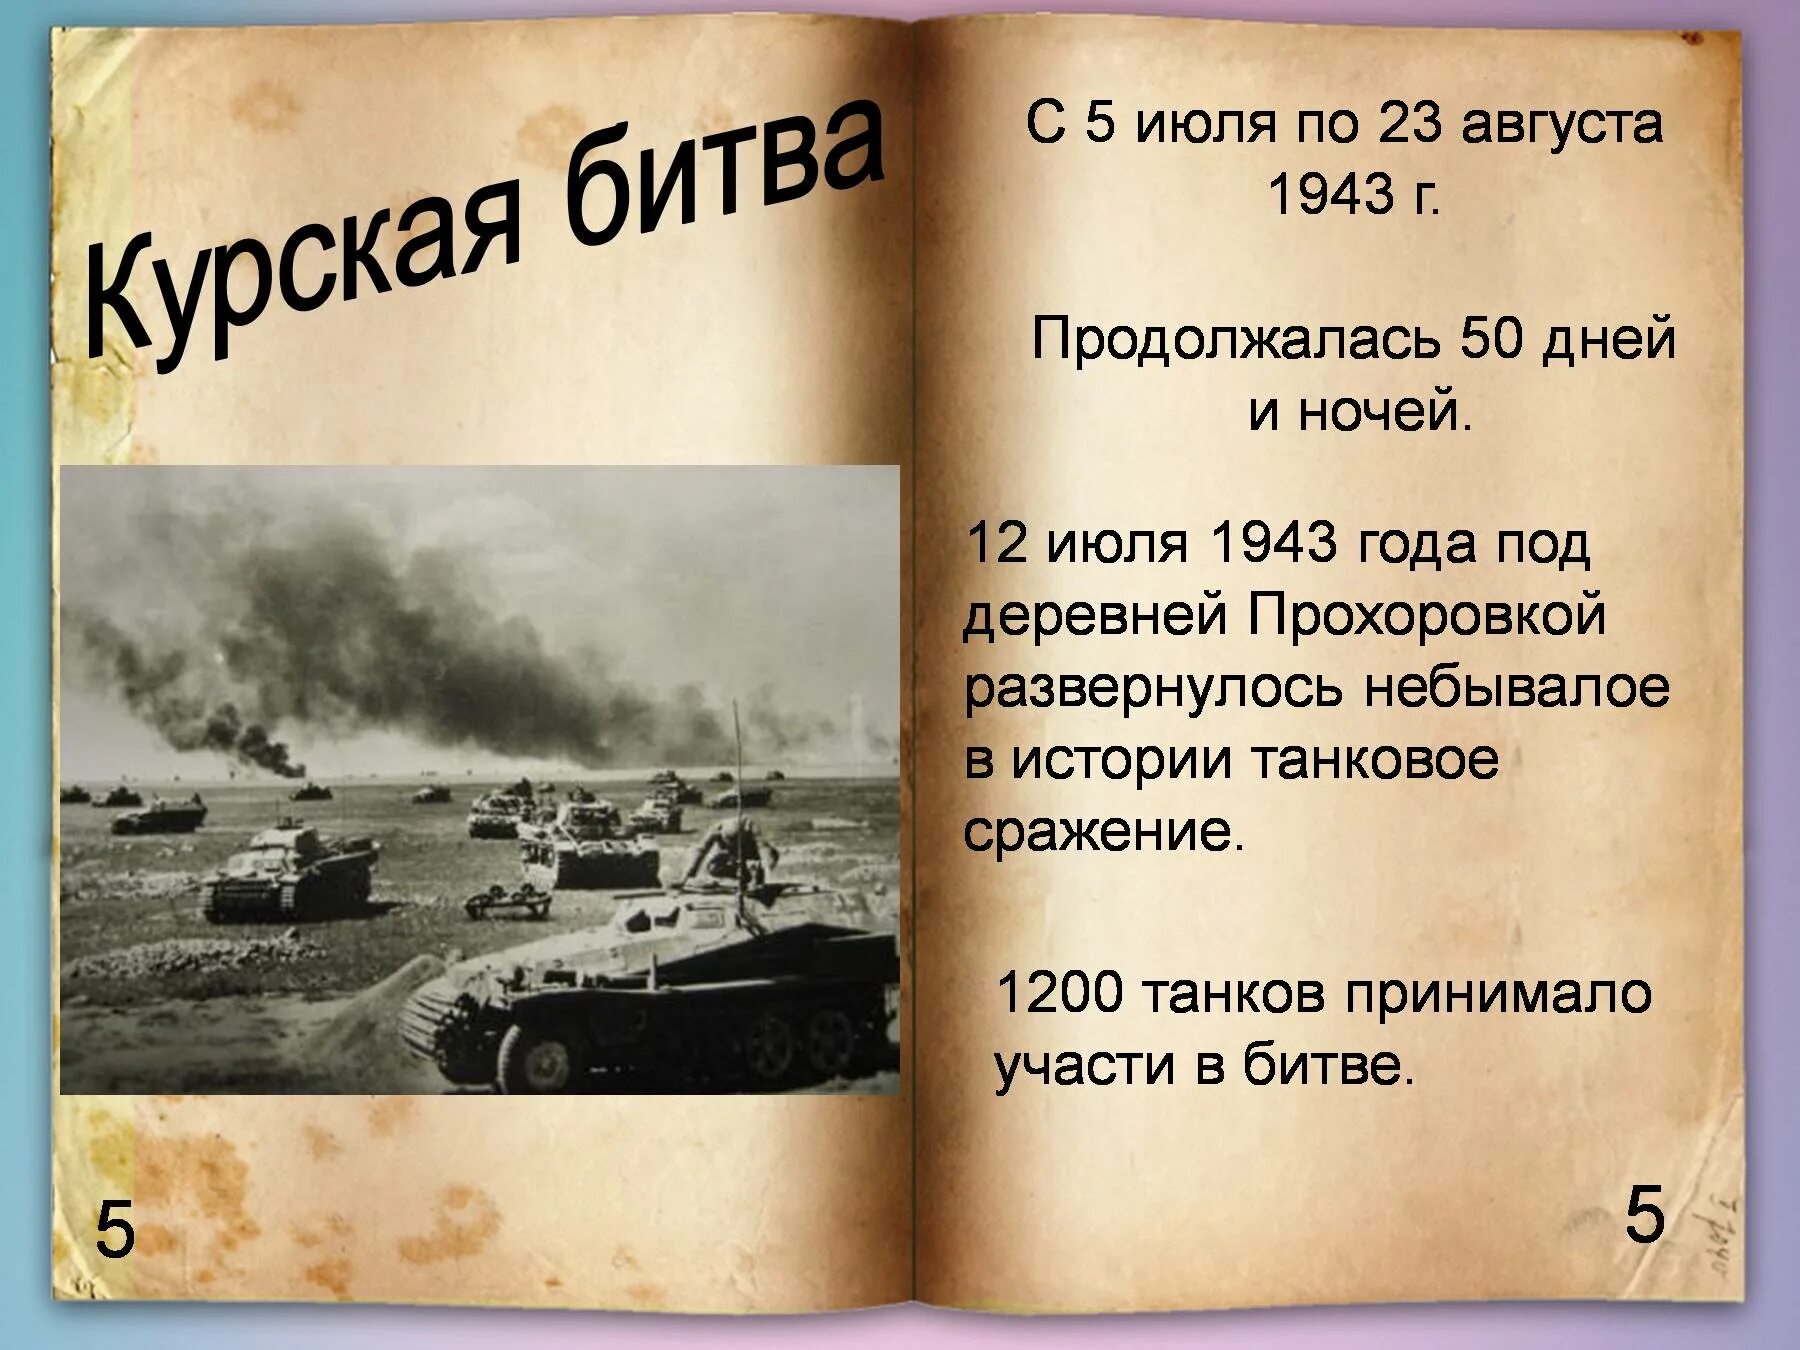 5 Июля – 23 августа 1943 г. – Курская битва. Курская дуга 1943 танковое сражение. Курская битва июль август 1943.